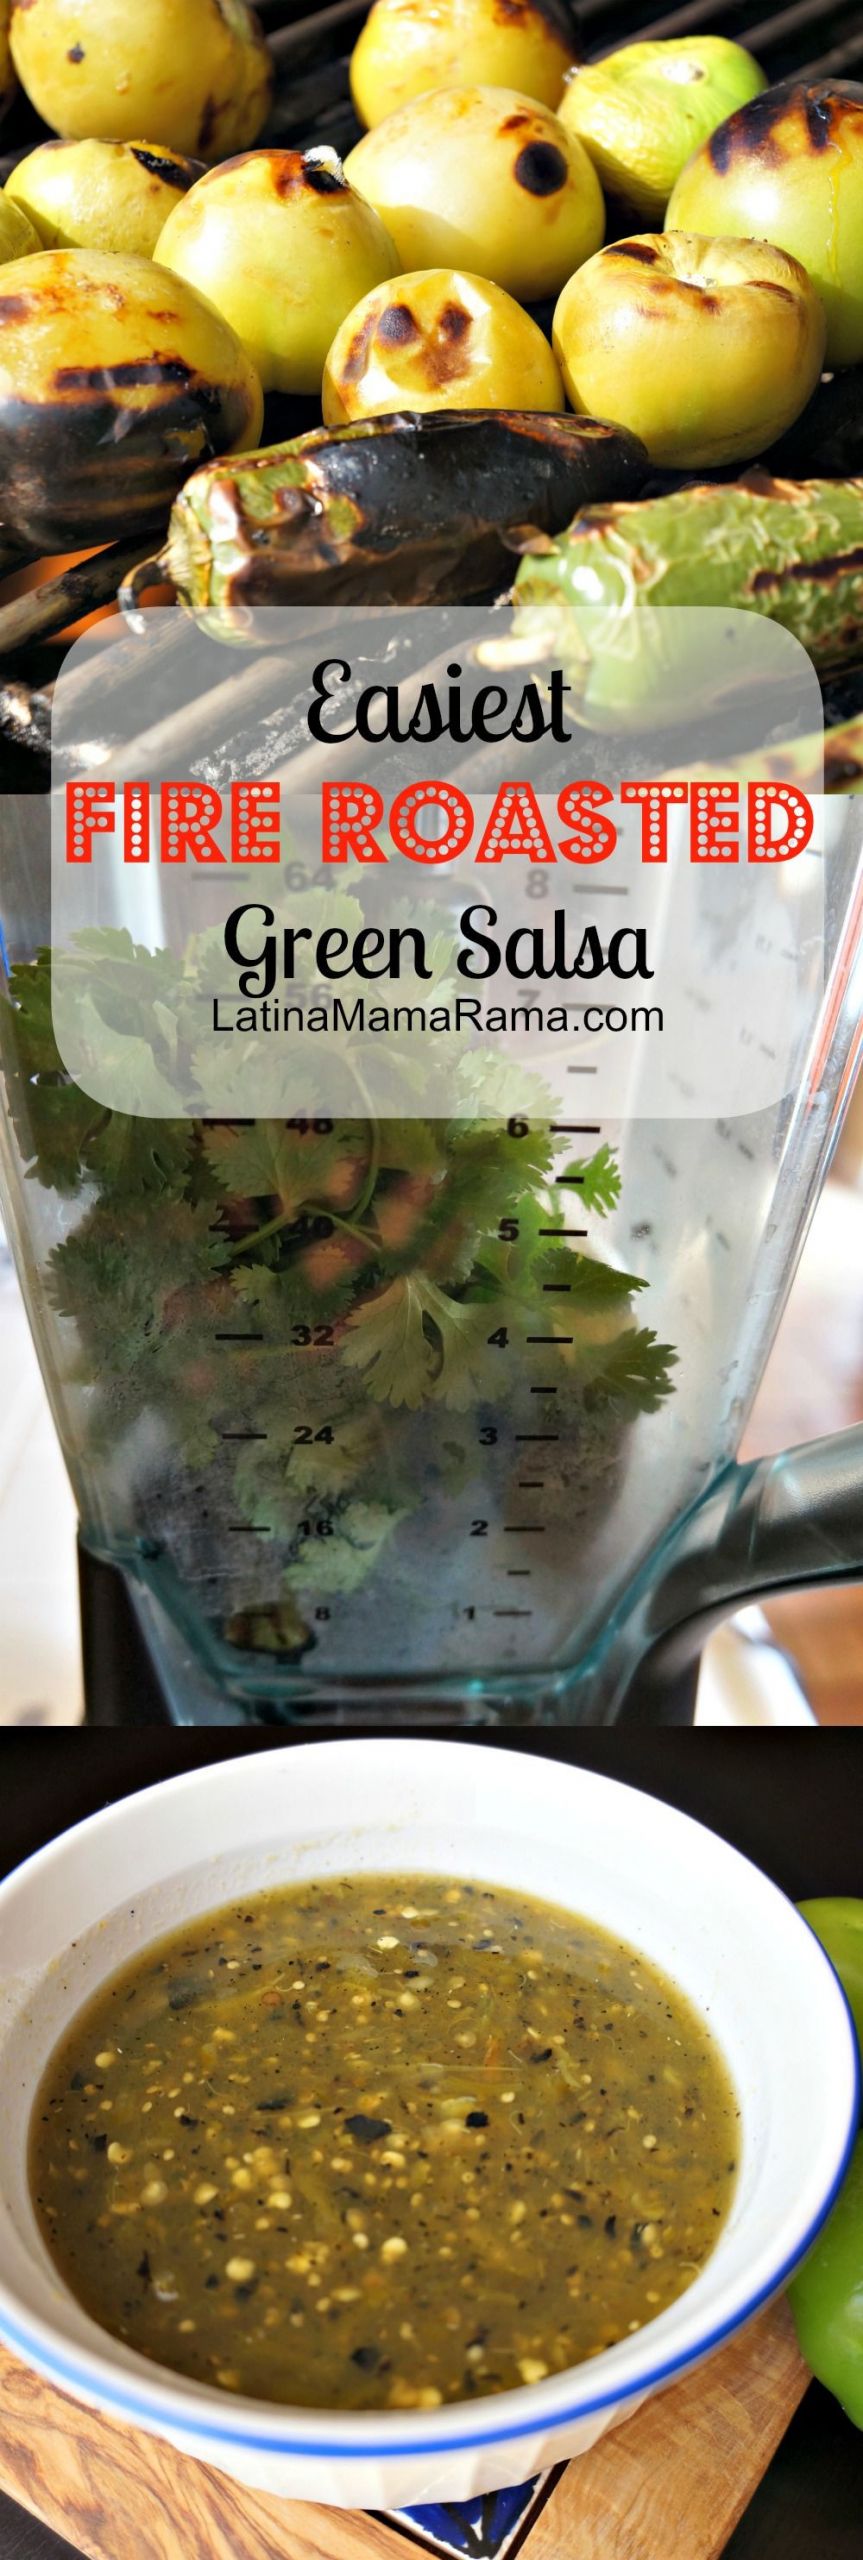 King Taco Green Salsa Recipe
 Easiest Fire Roasted Green Salsa